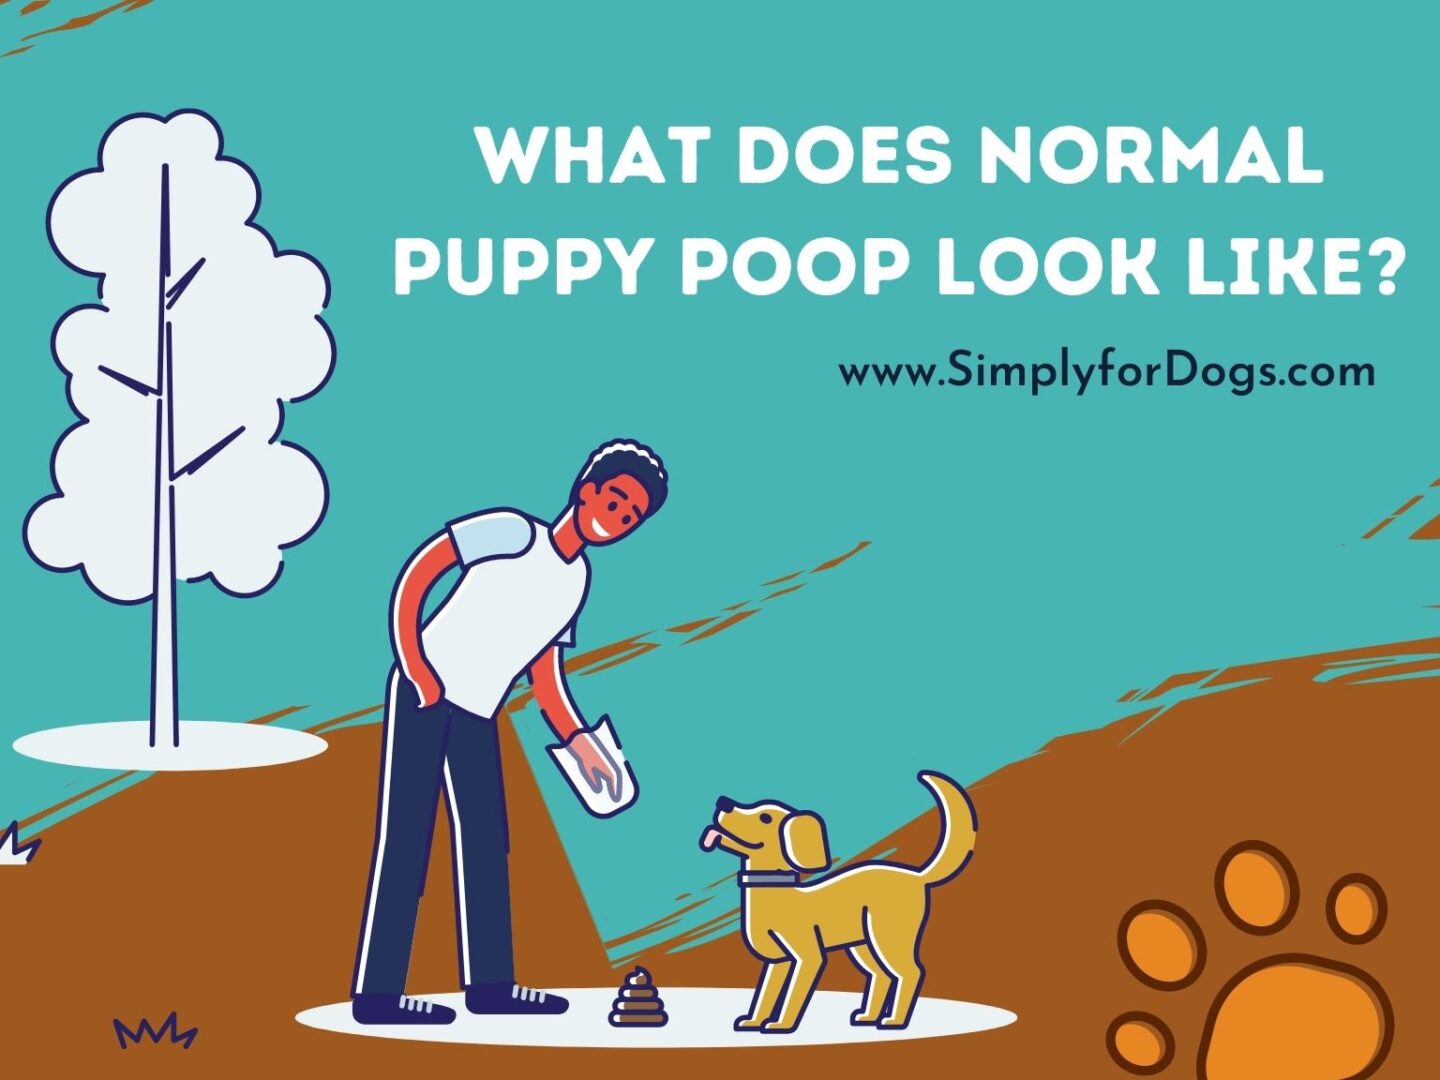 Normal-Puppy-Poop